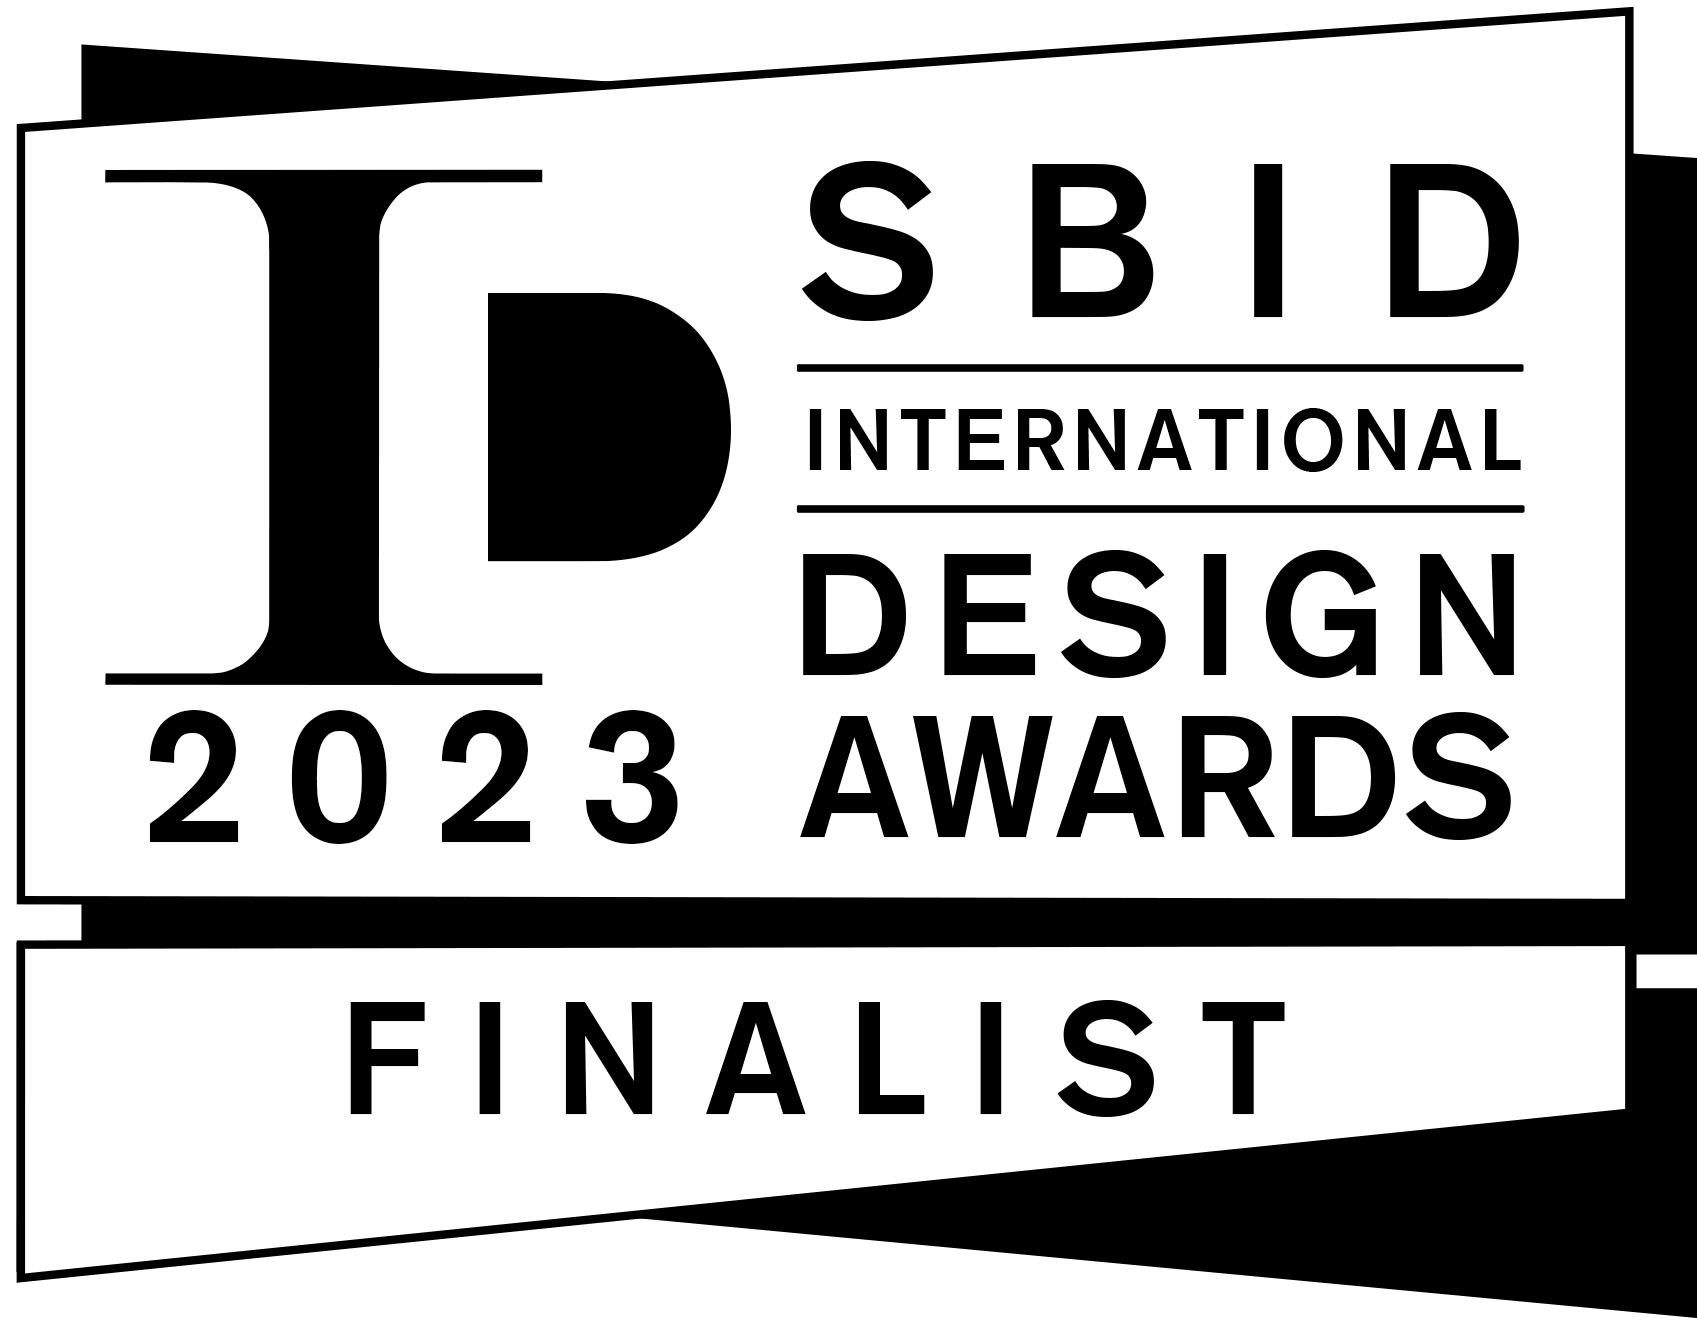 MTD finalists in the SBID International Design Awards 2023 - MTD